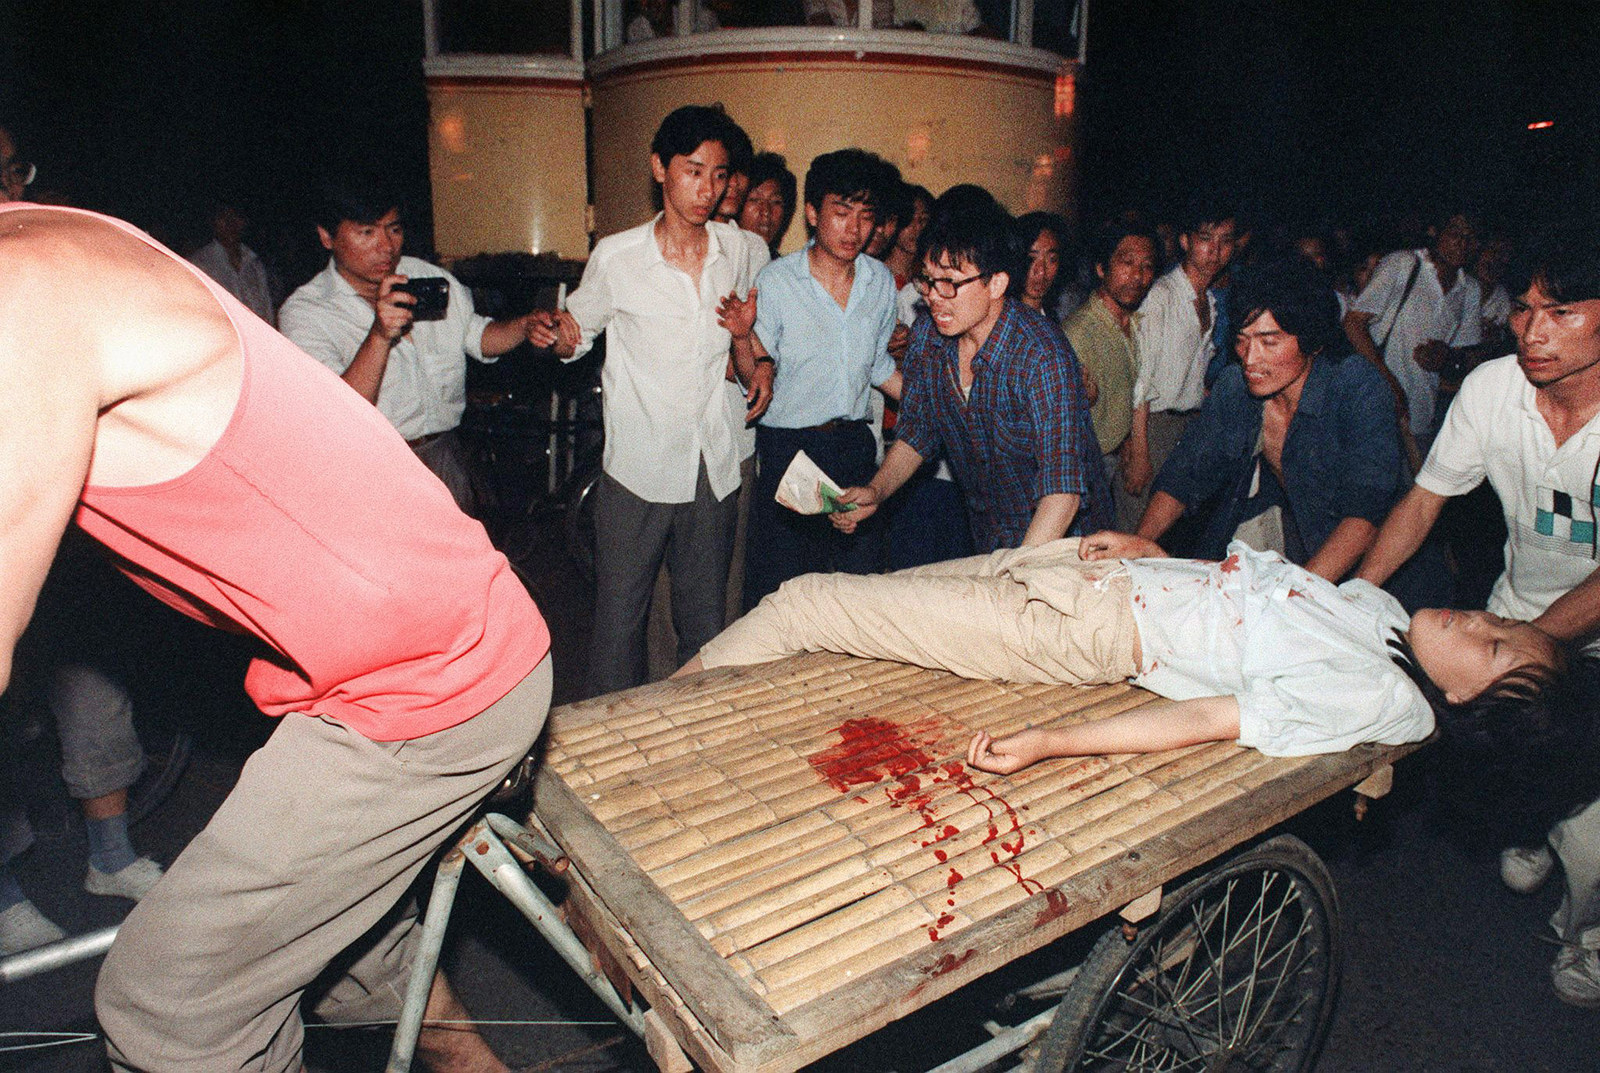 tiananmen square 1989 bodies